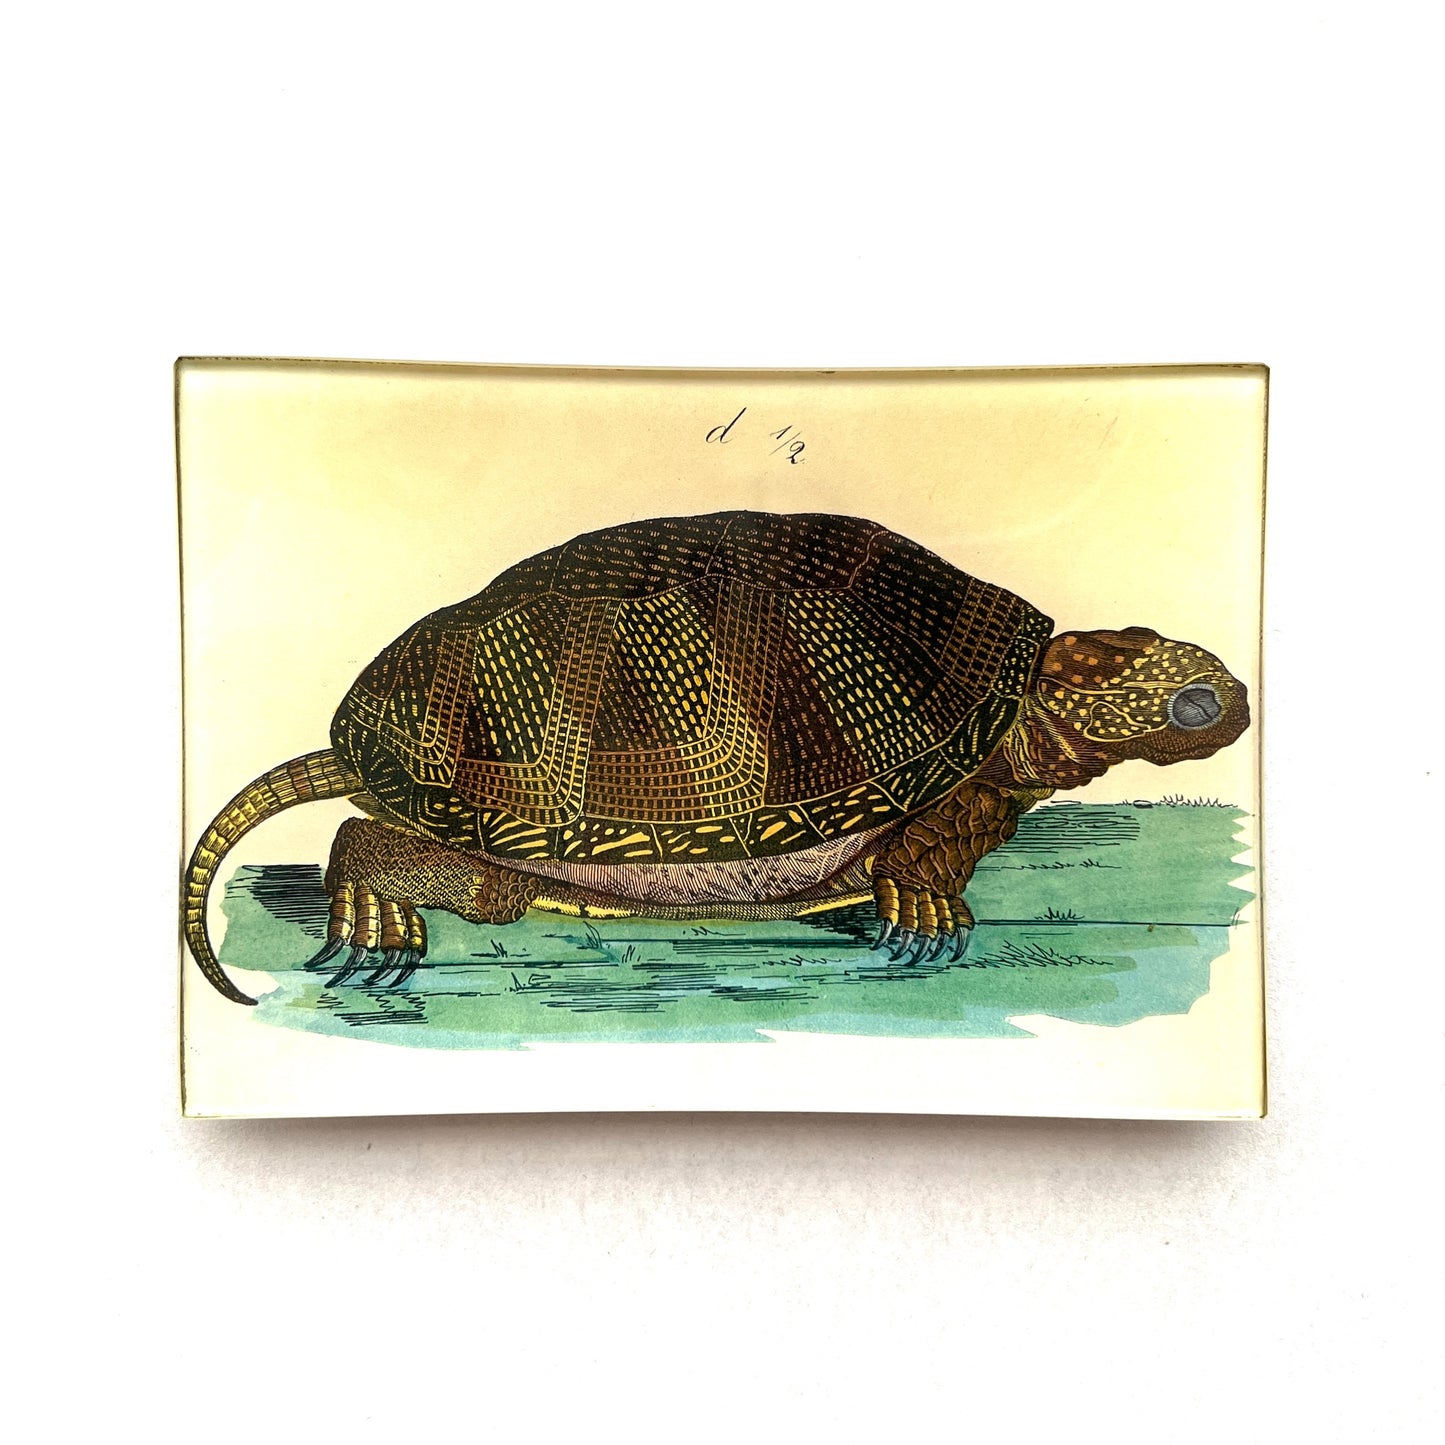 【JOHN DERIAN】デコパージュプレート Turtle